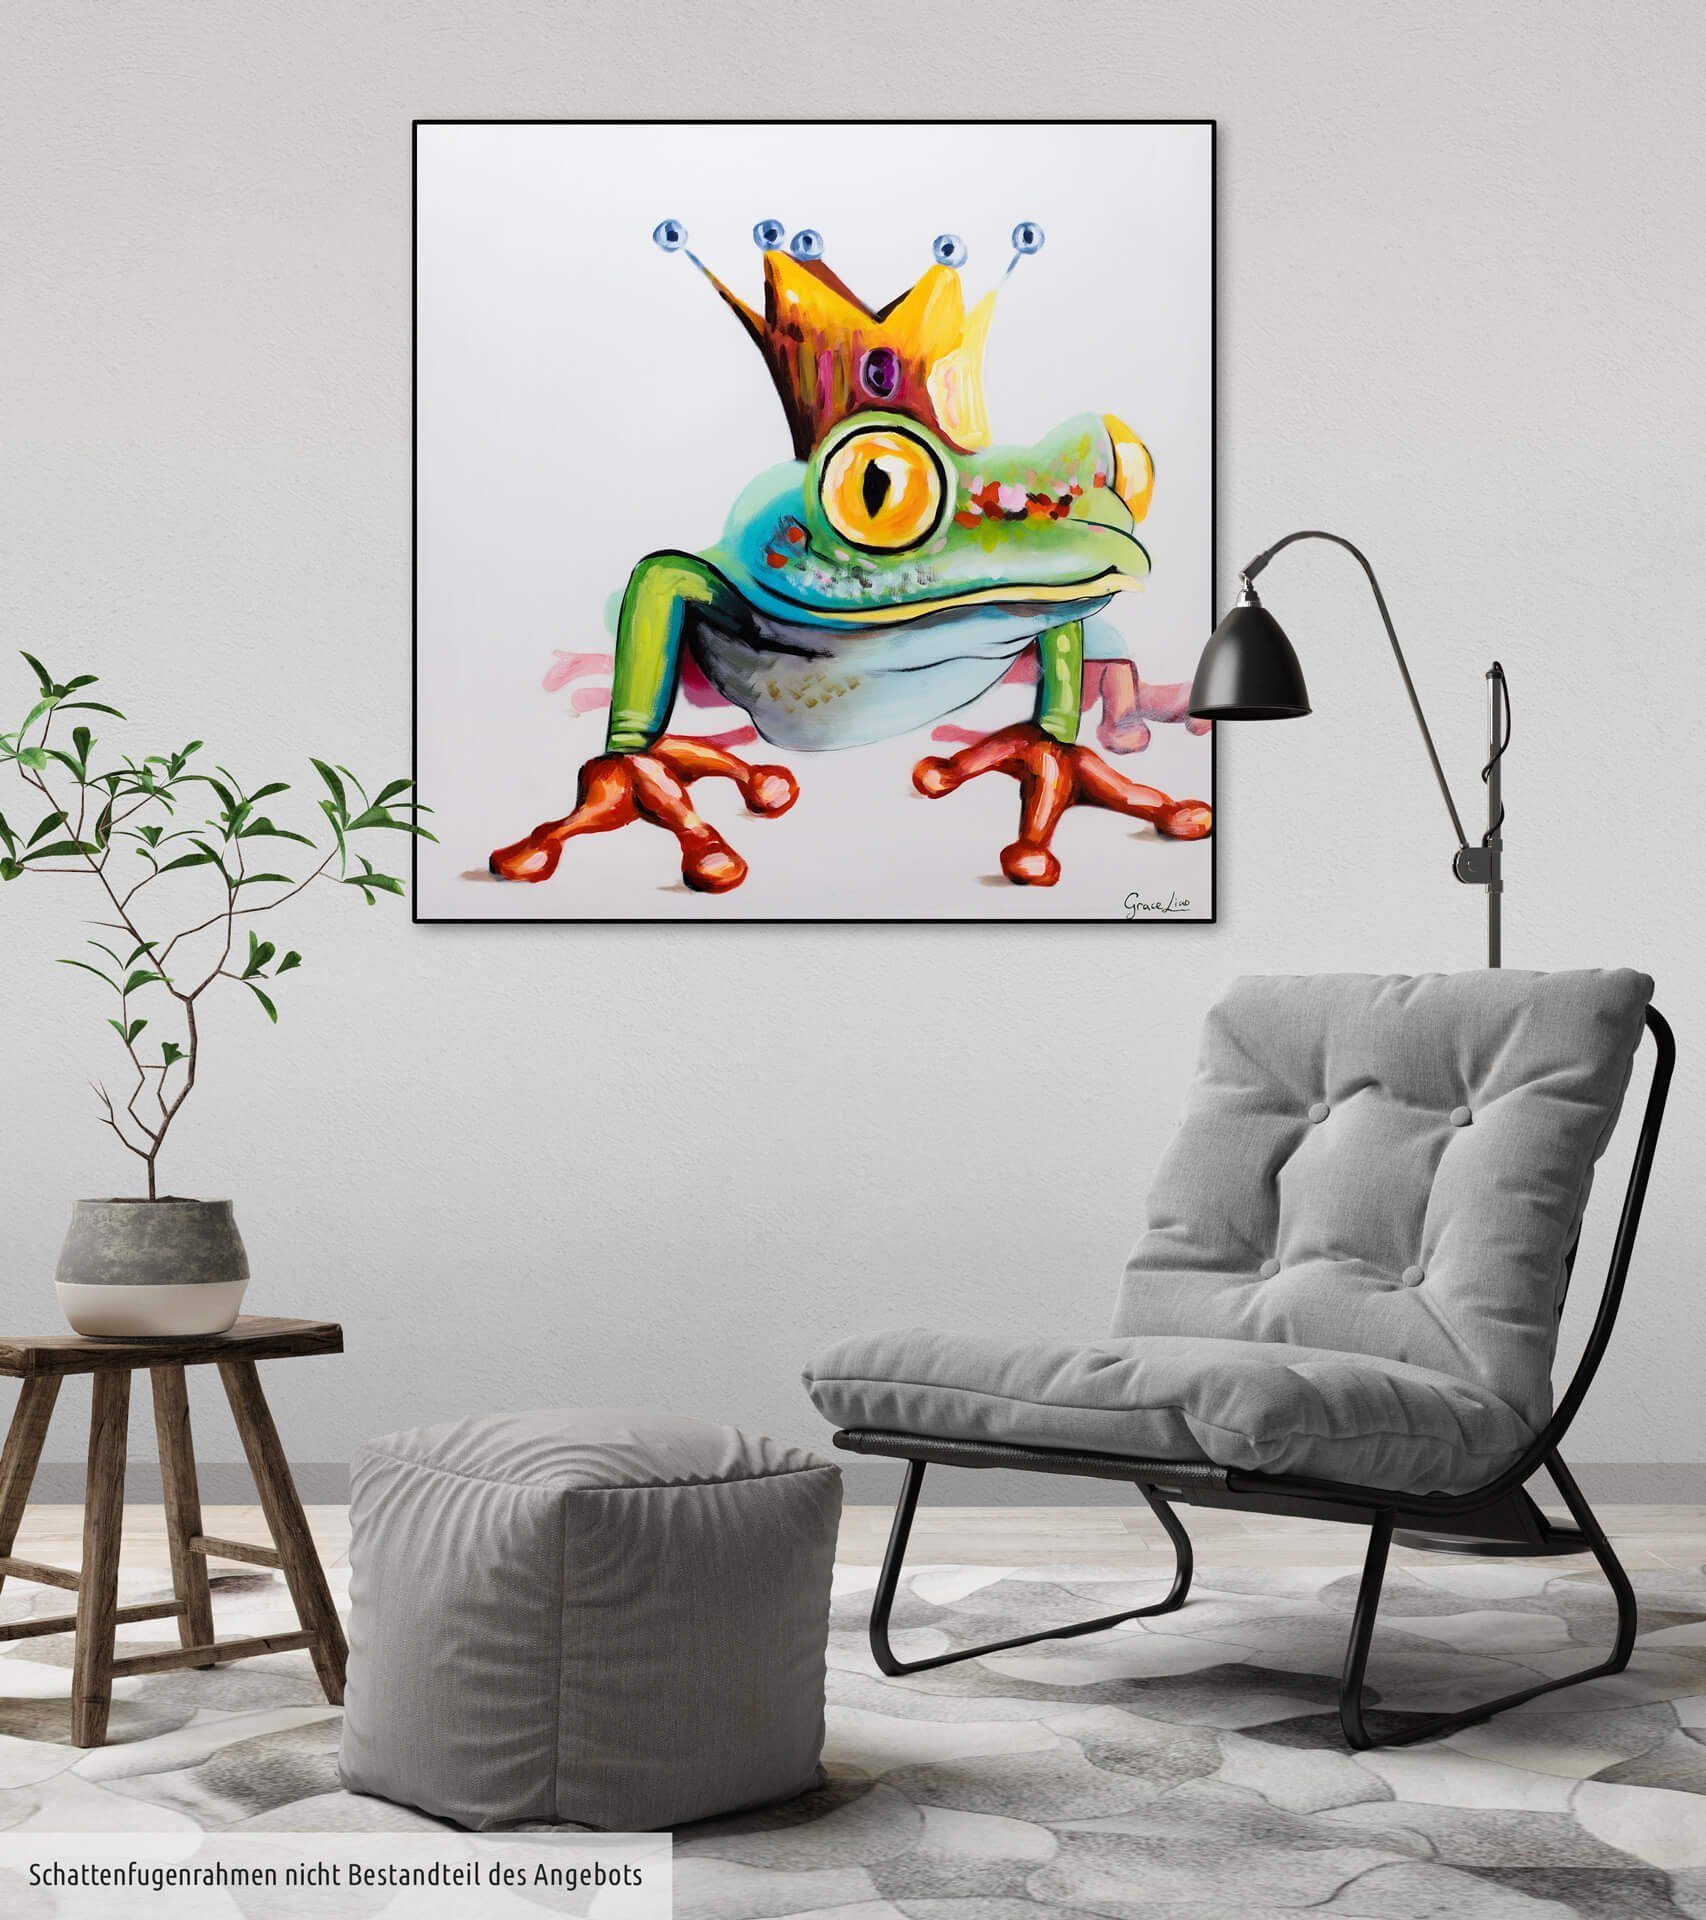 Wohnzimmer KUNSTLOFT 100% Froschkönig cm, 80x80 Wandbild HANDGEMALT Gemälde Leinwandbild